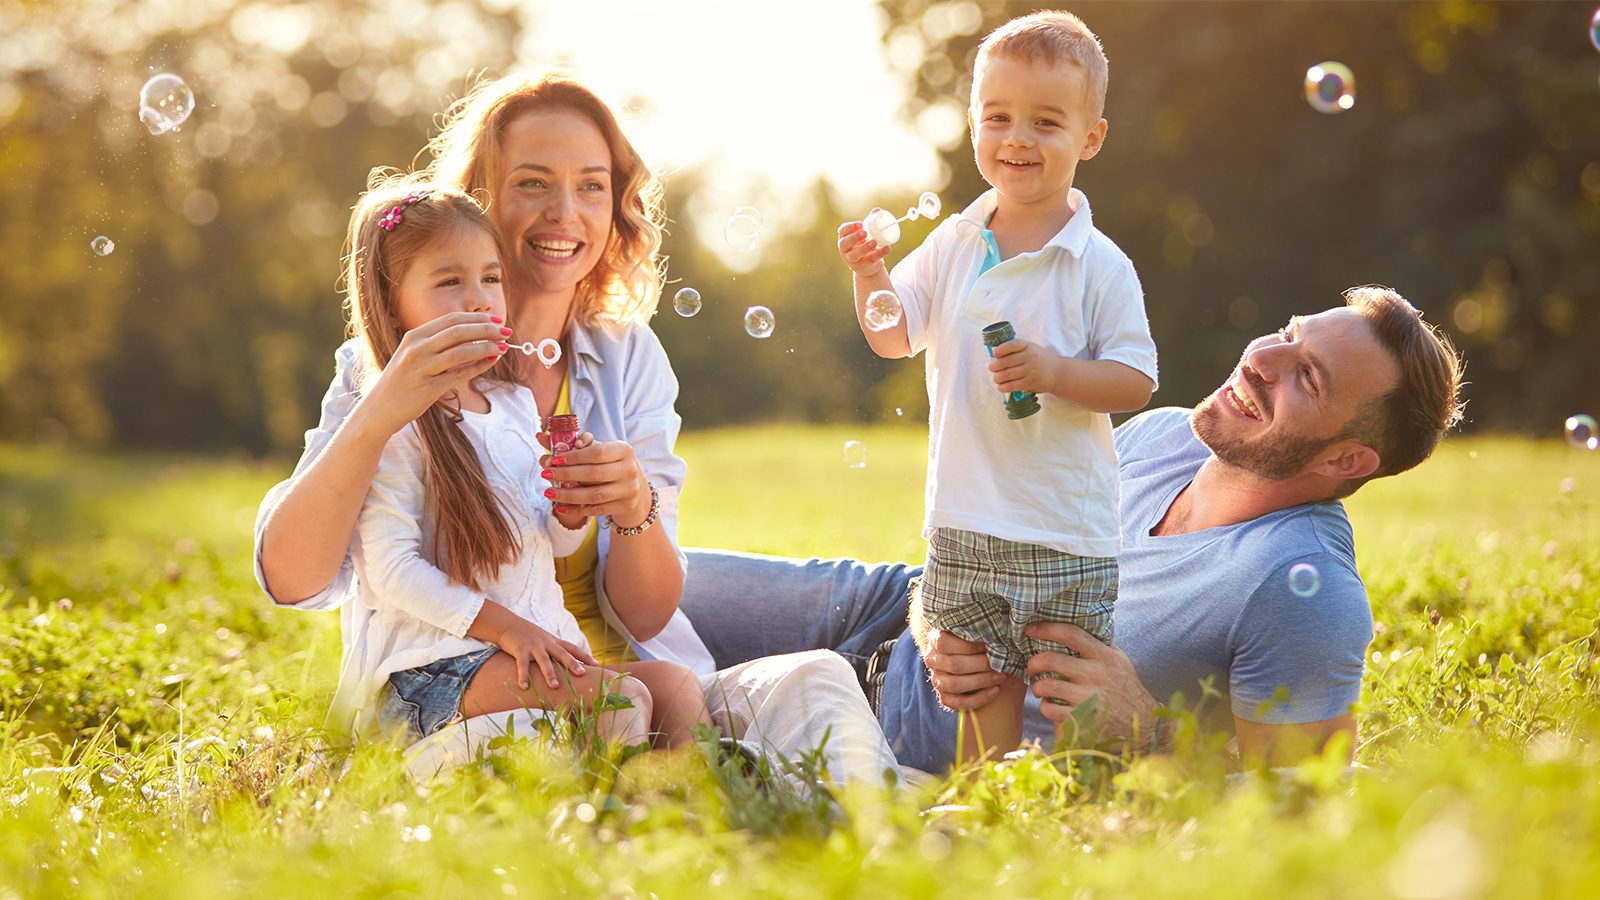 Bellevue Kids Dentist - Family outdoors blowing bubbles